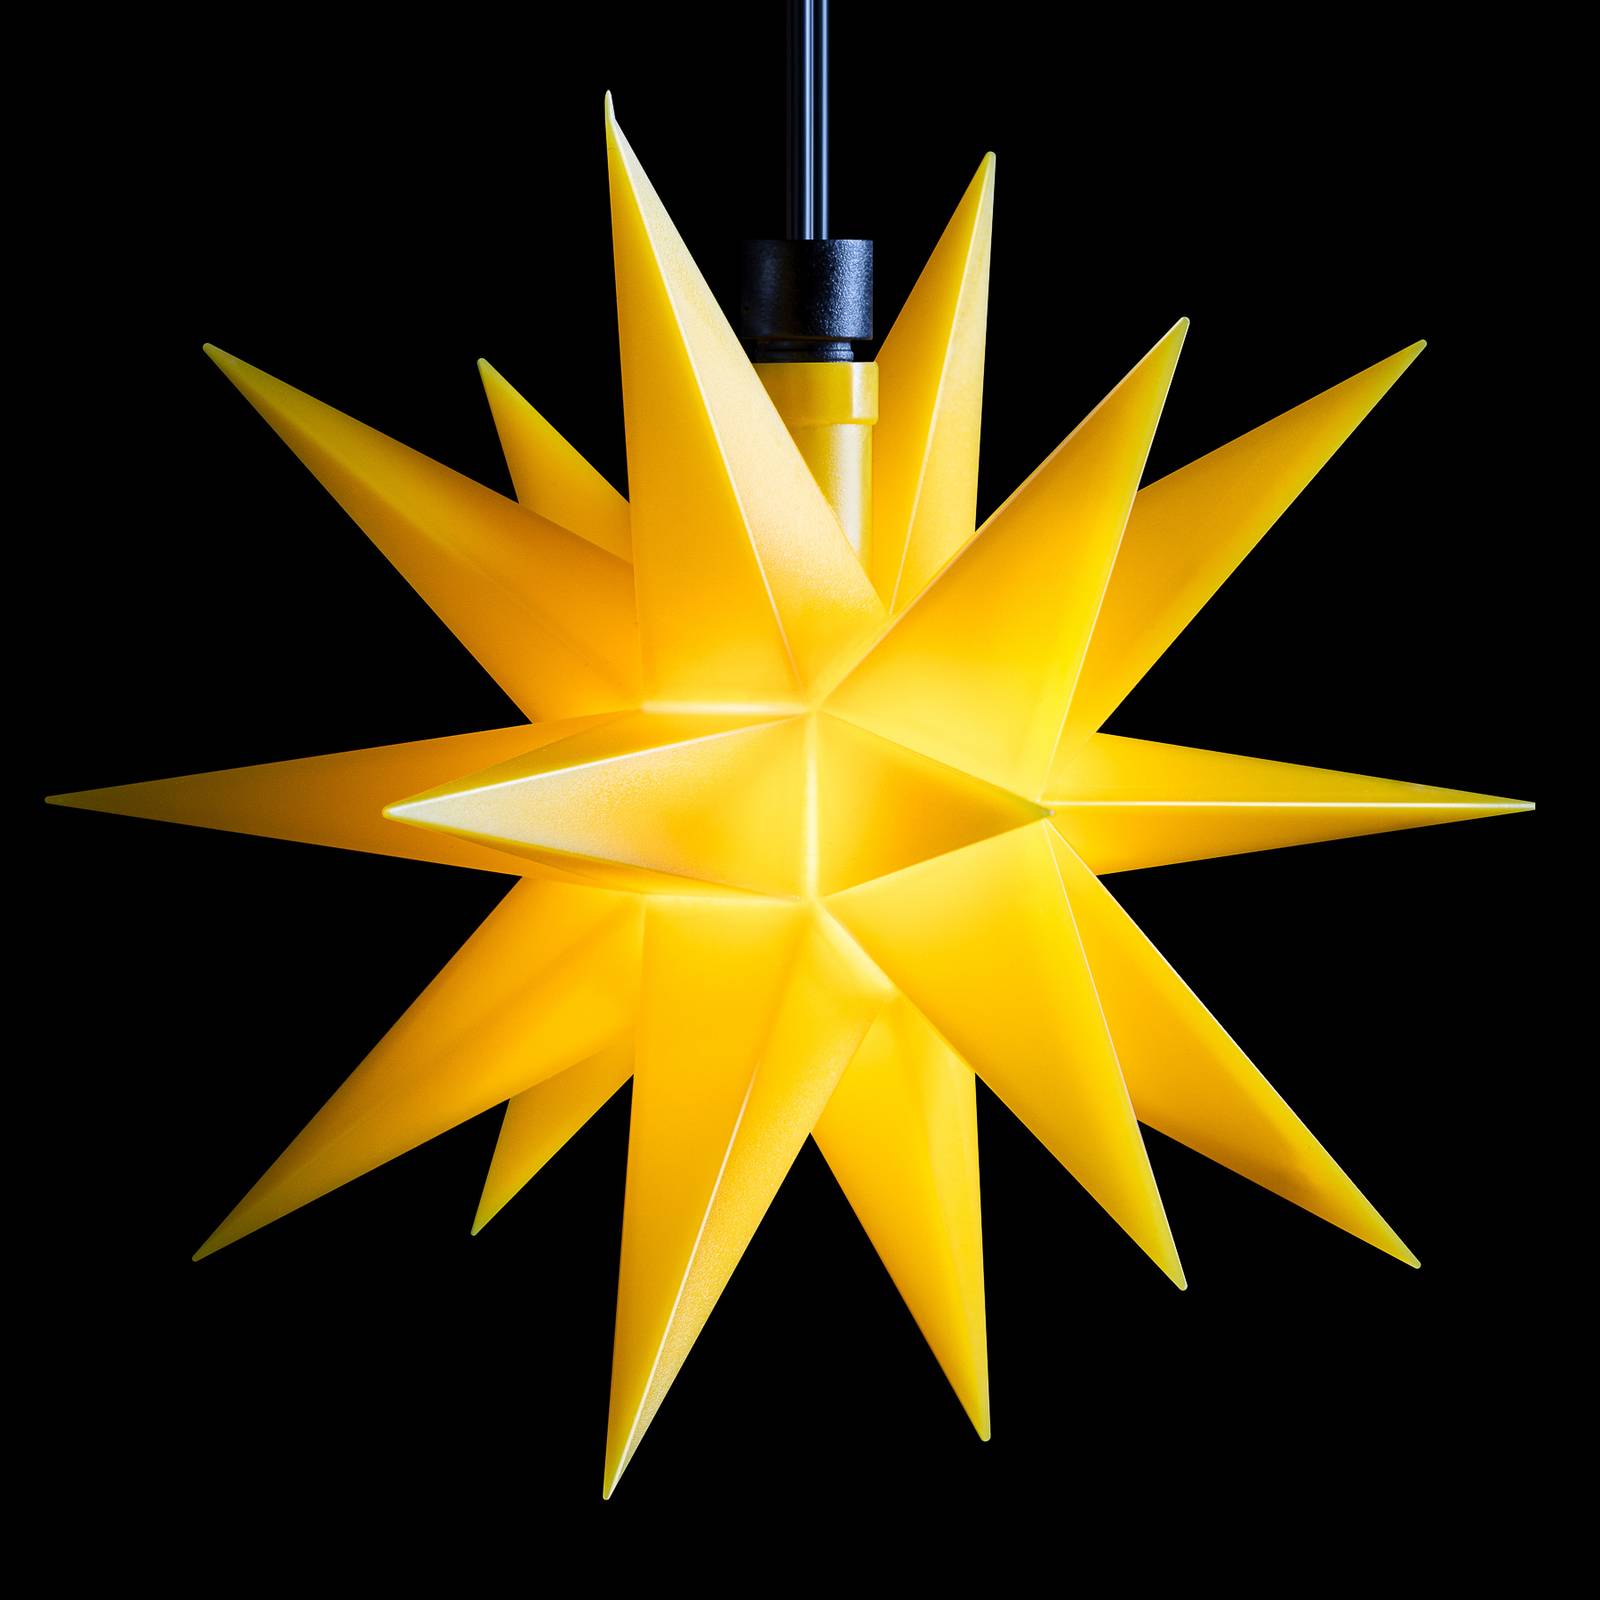 LED-lyskæde ministjerne ude 3 lyskilder gul